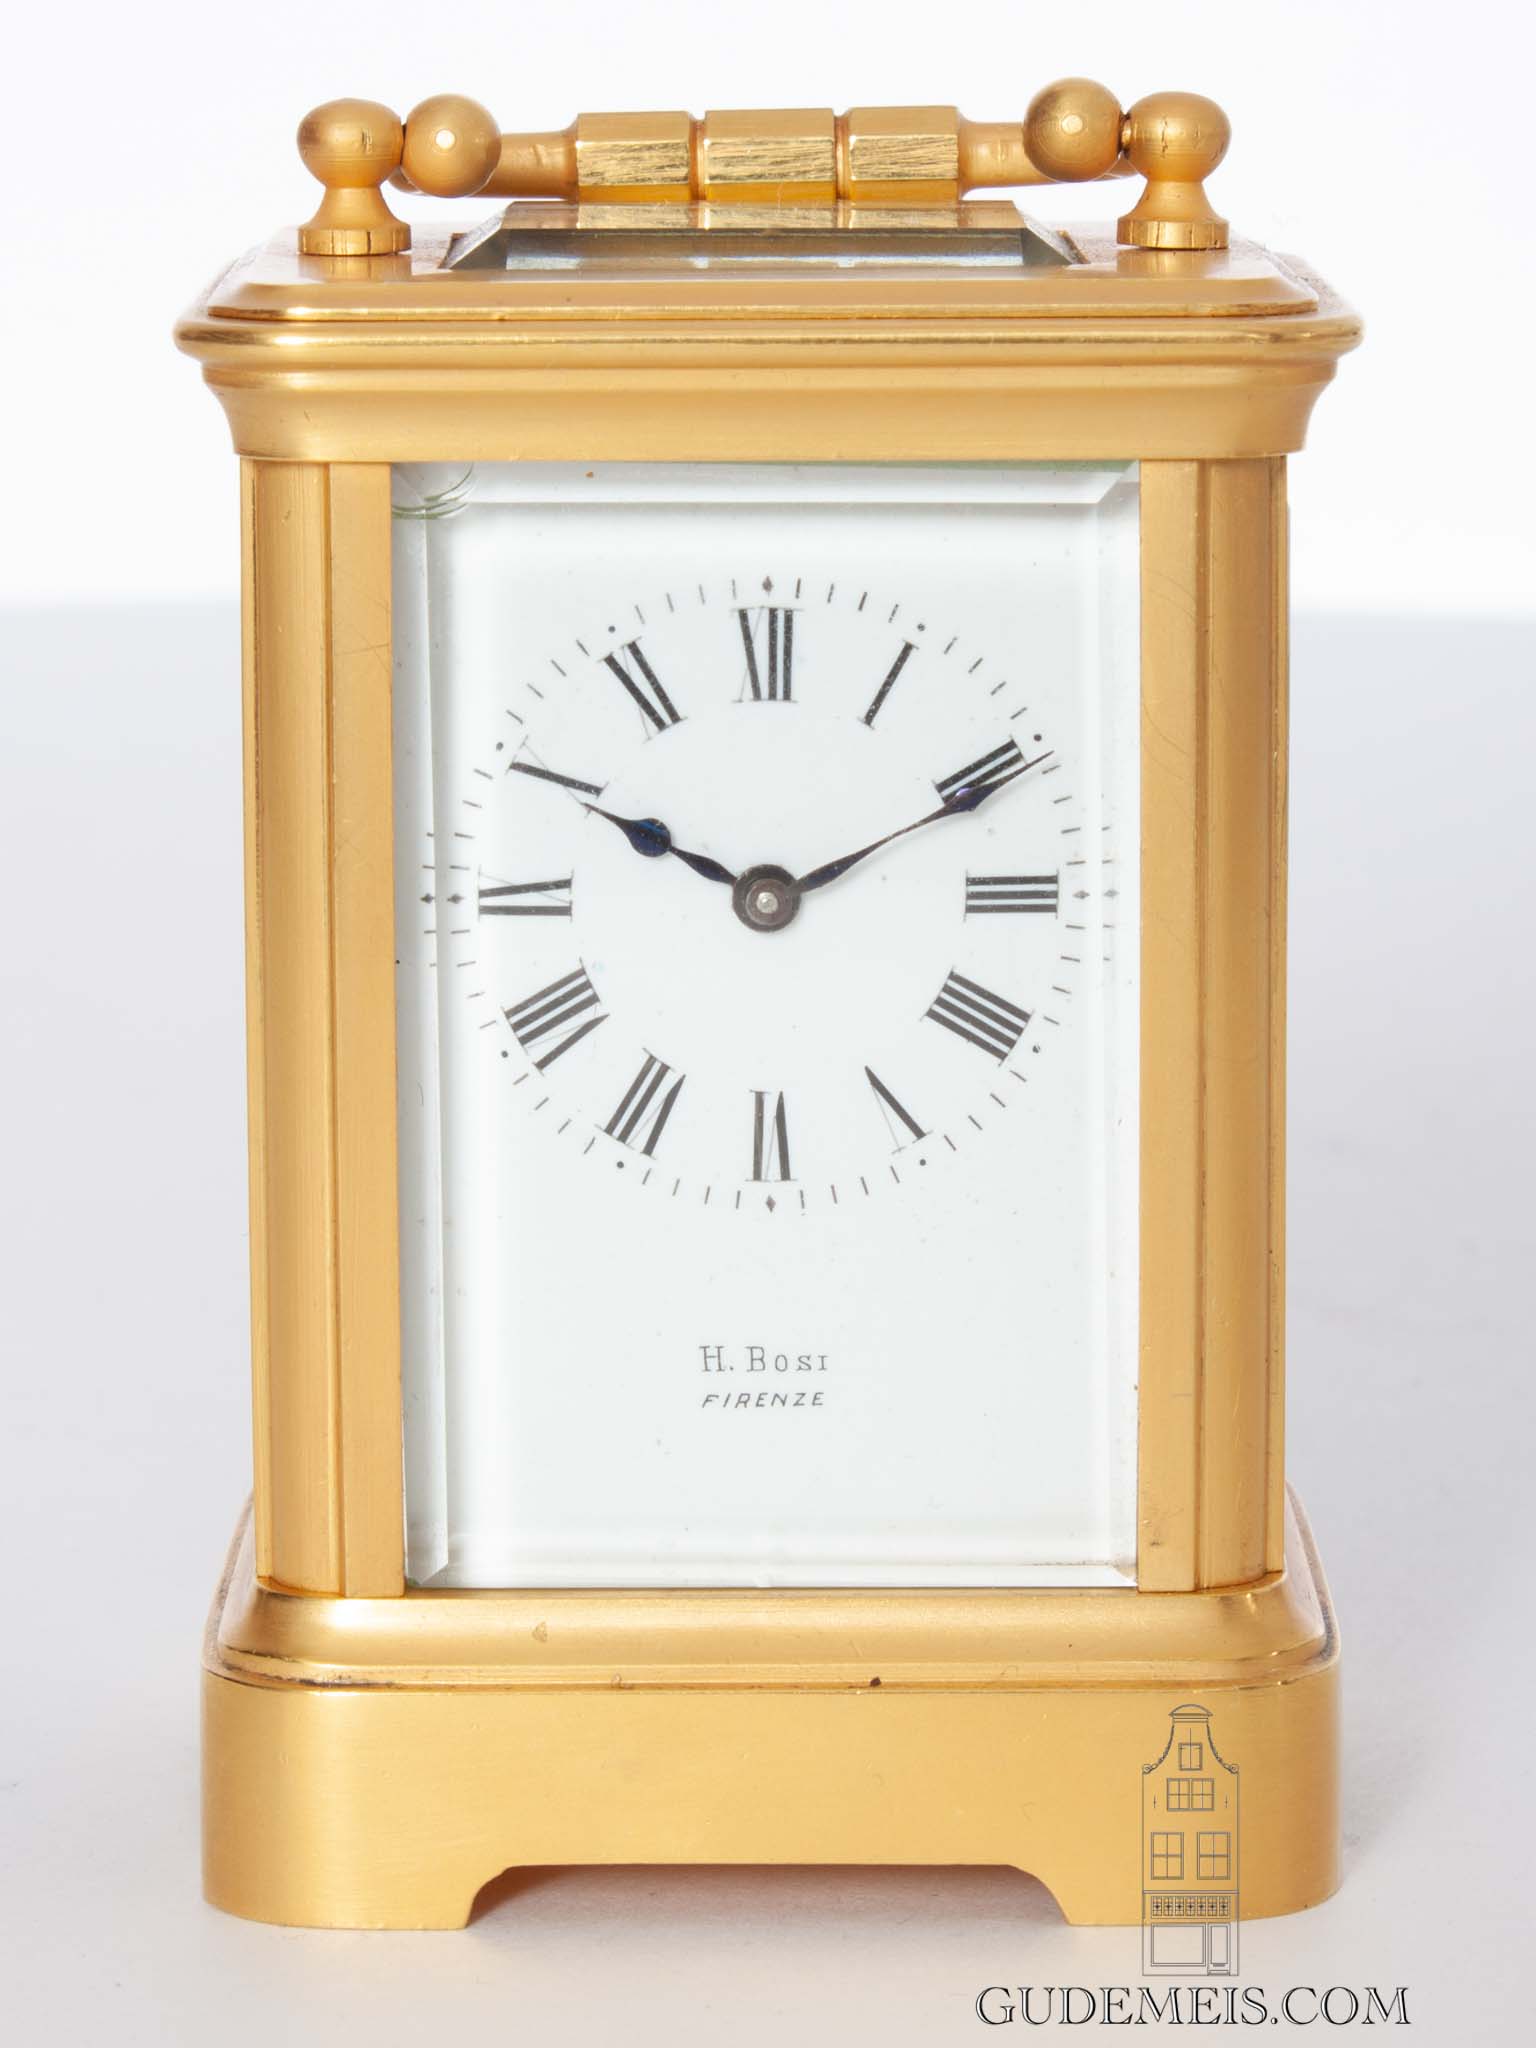 miniature-antique-carriage-clock-H. Bosi-Firenze-French-pietra-dura-gold-plated-bronze-ormolu-floral-motifs-